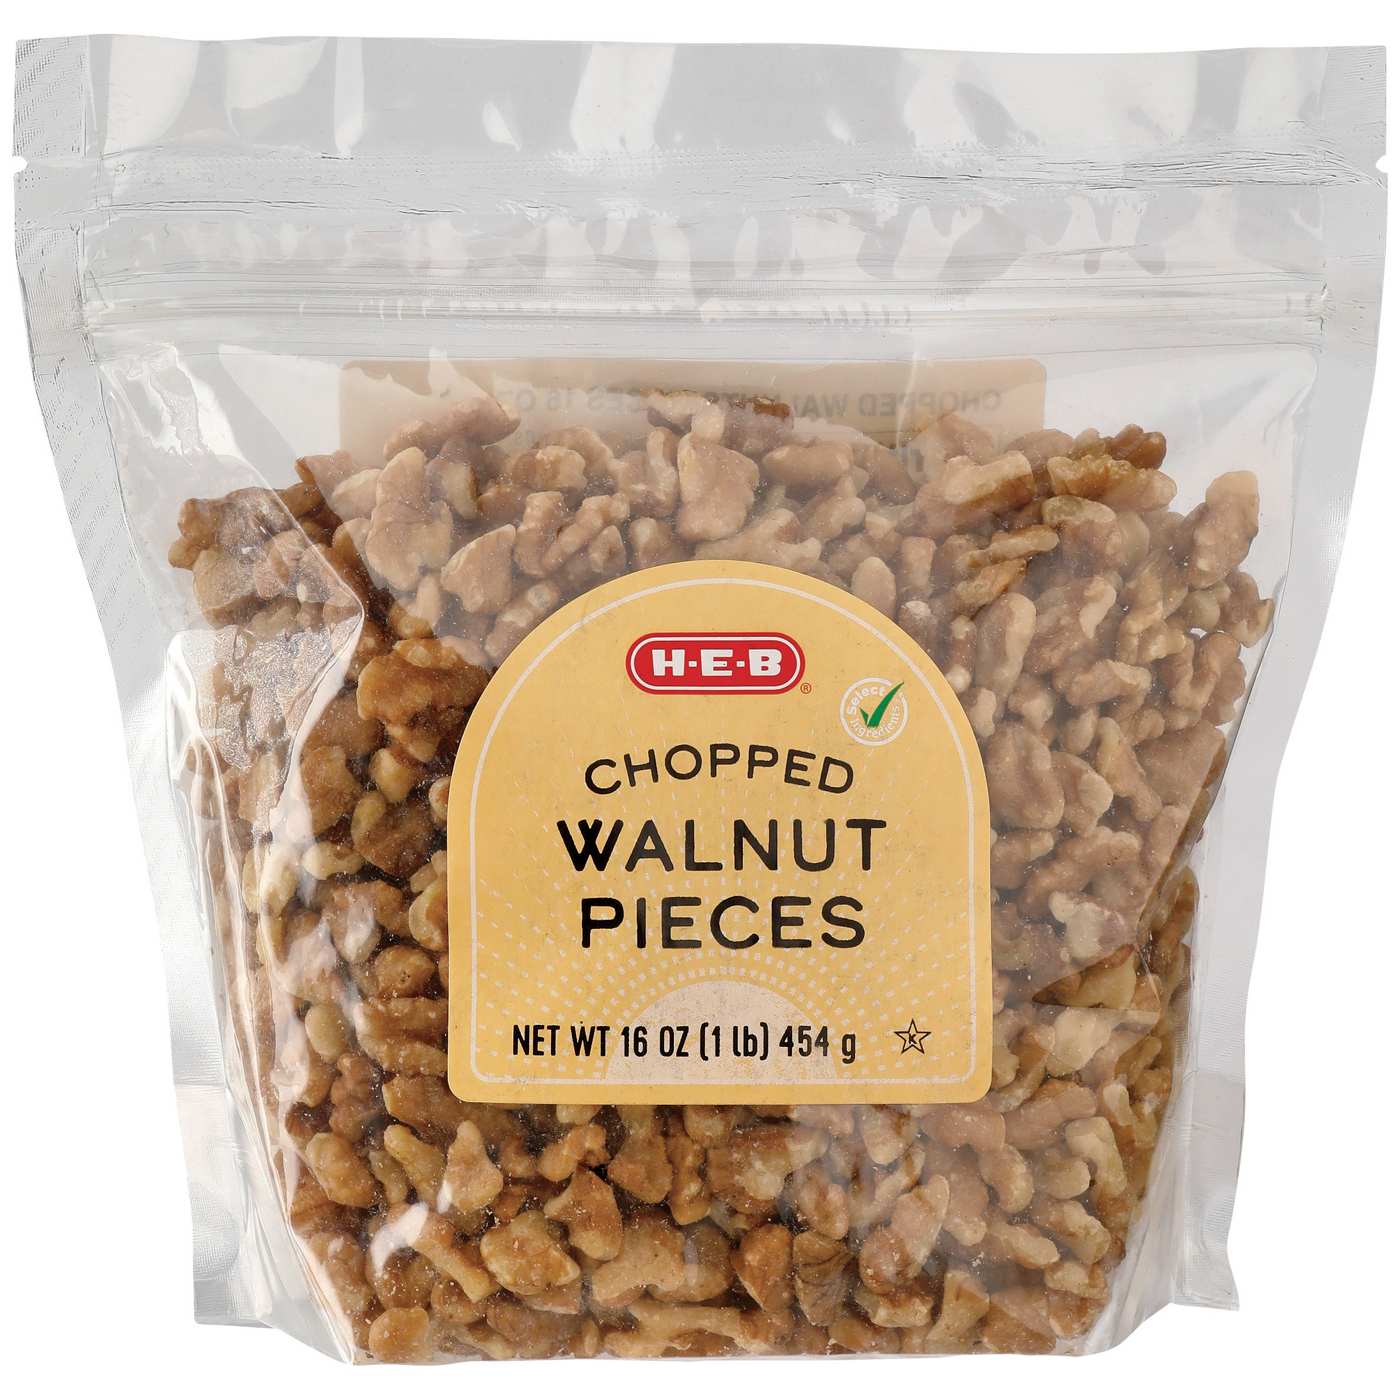 H-E-B Chopped Walnut Pieces; image 1 of 2